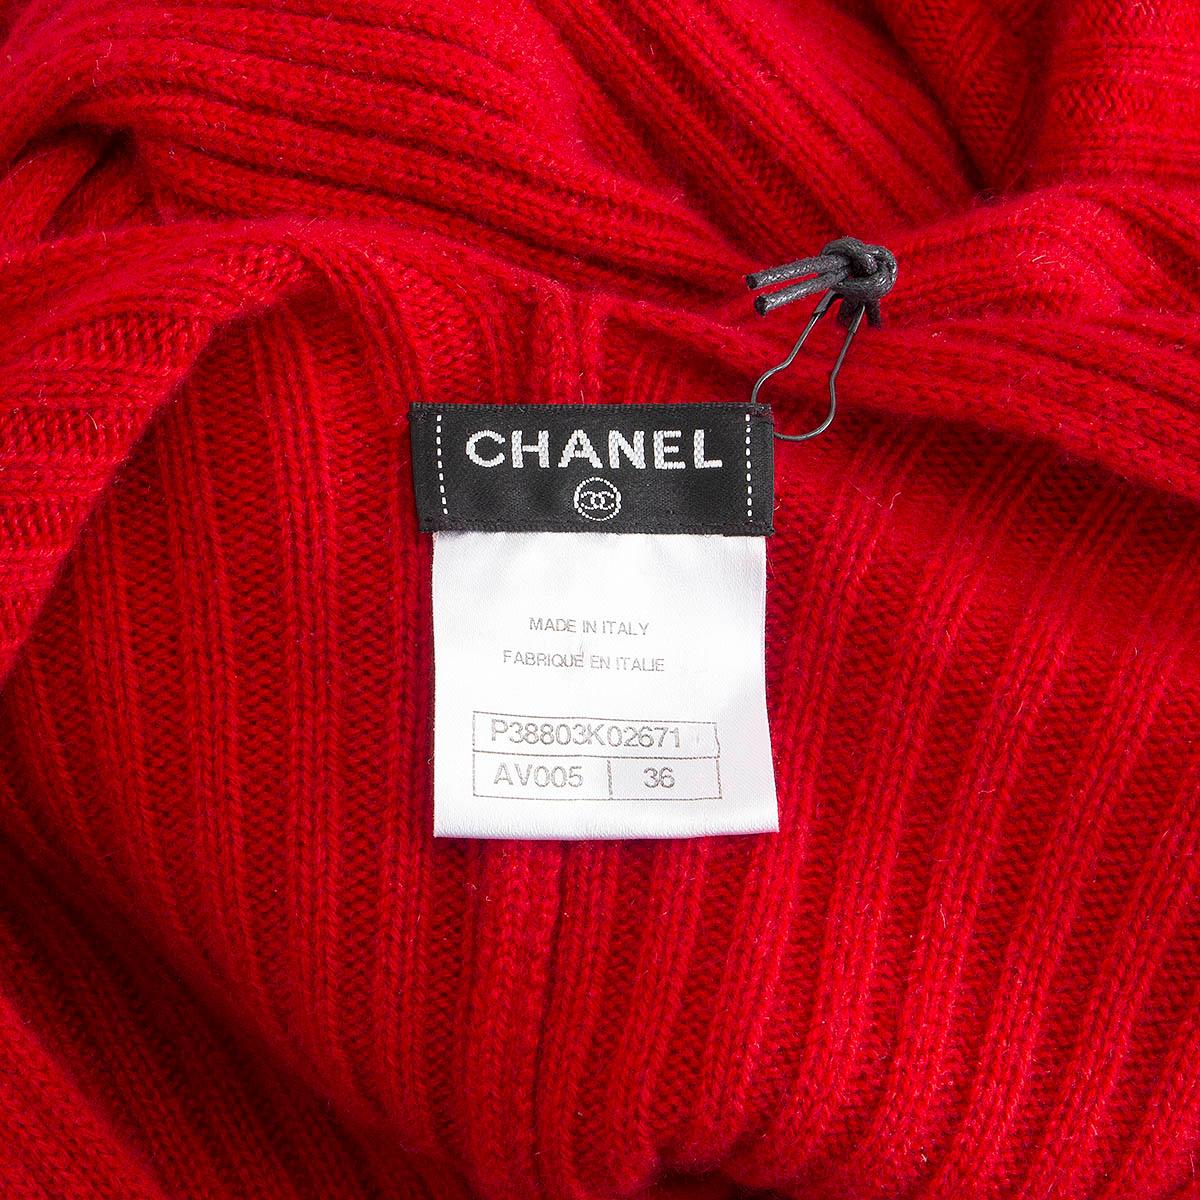 CHANEL red cashmere 2010 BELL SLEEVE RIB KNIT MINI Dress 36 XS 2